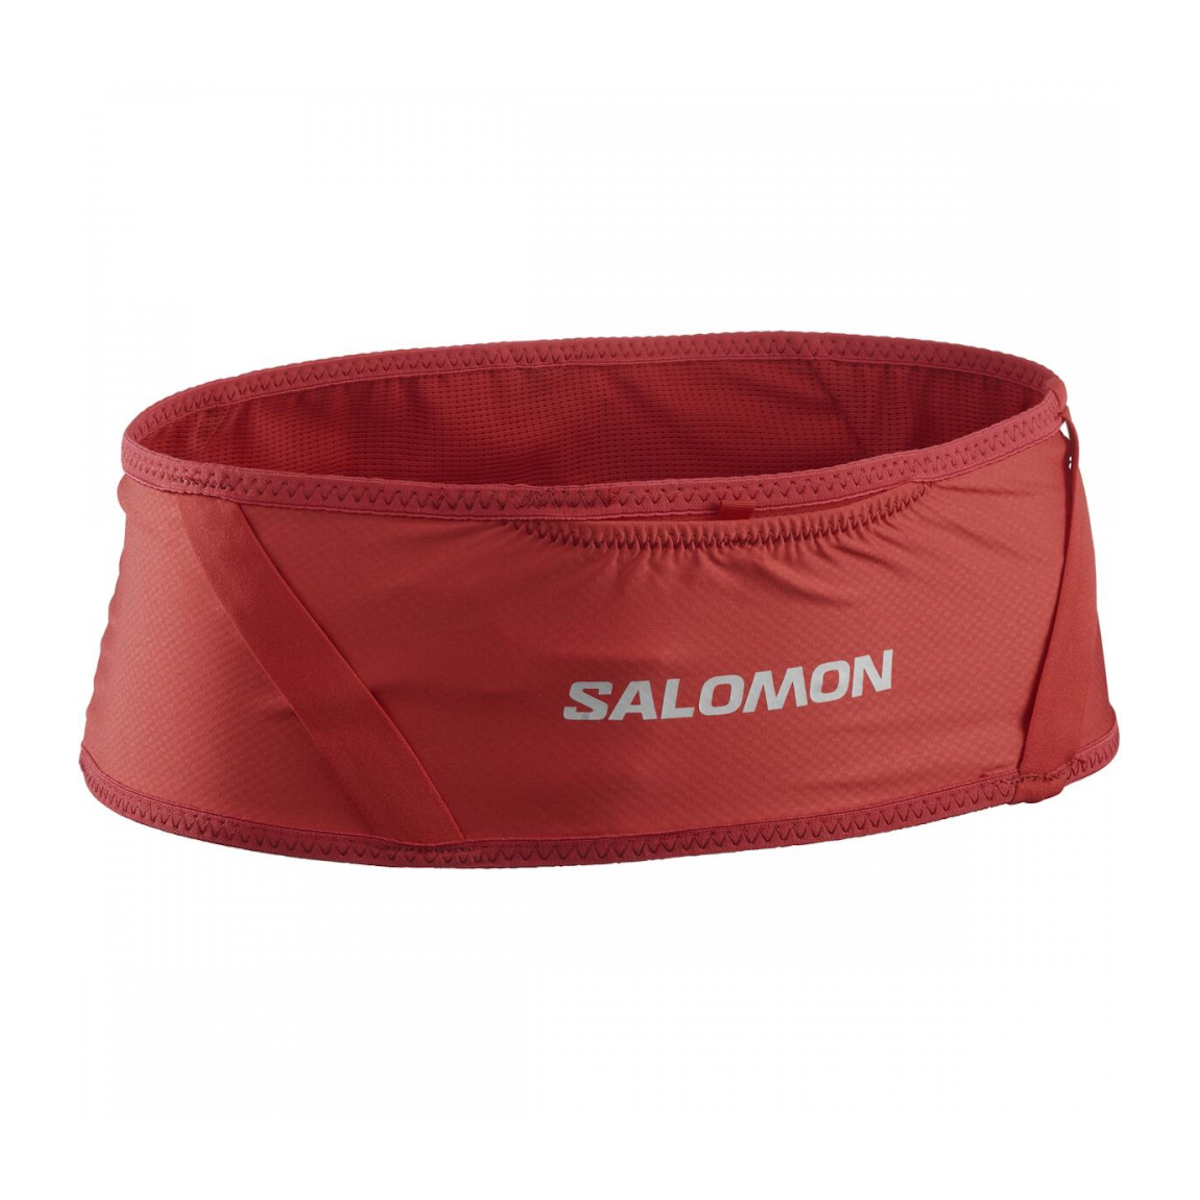 SALOMON PULSE BELT - red